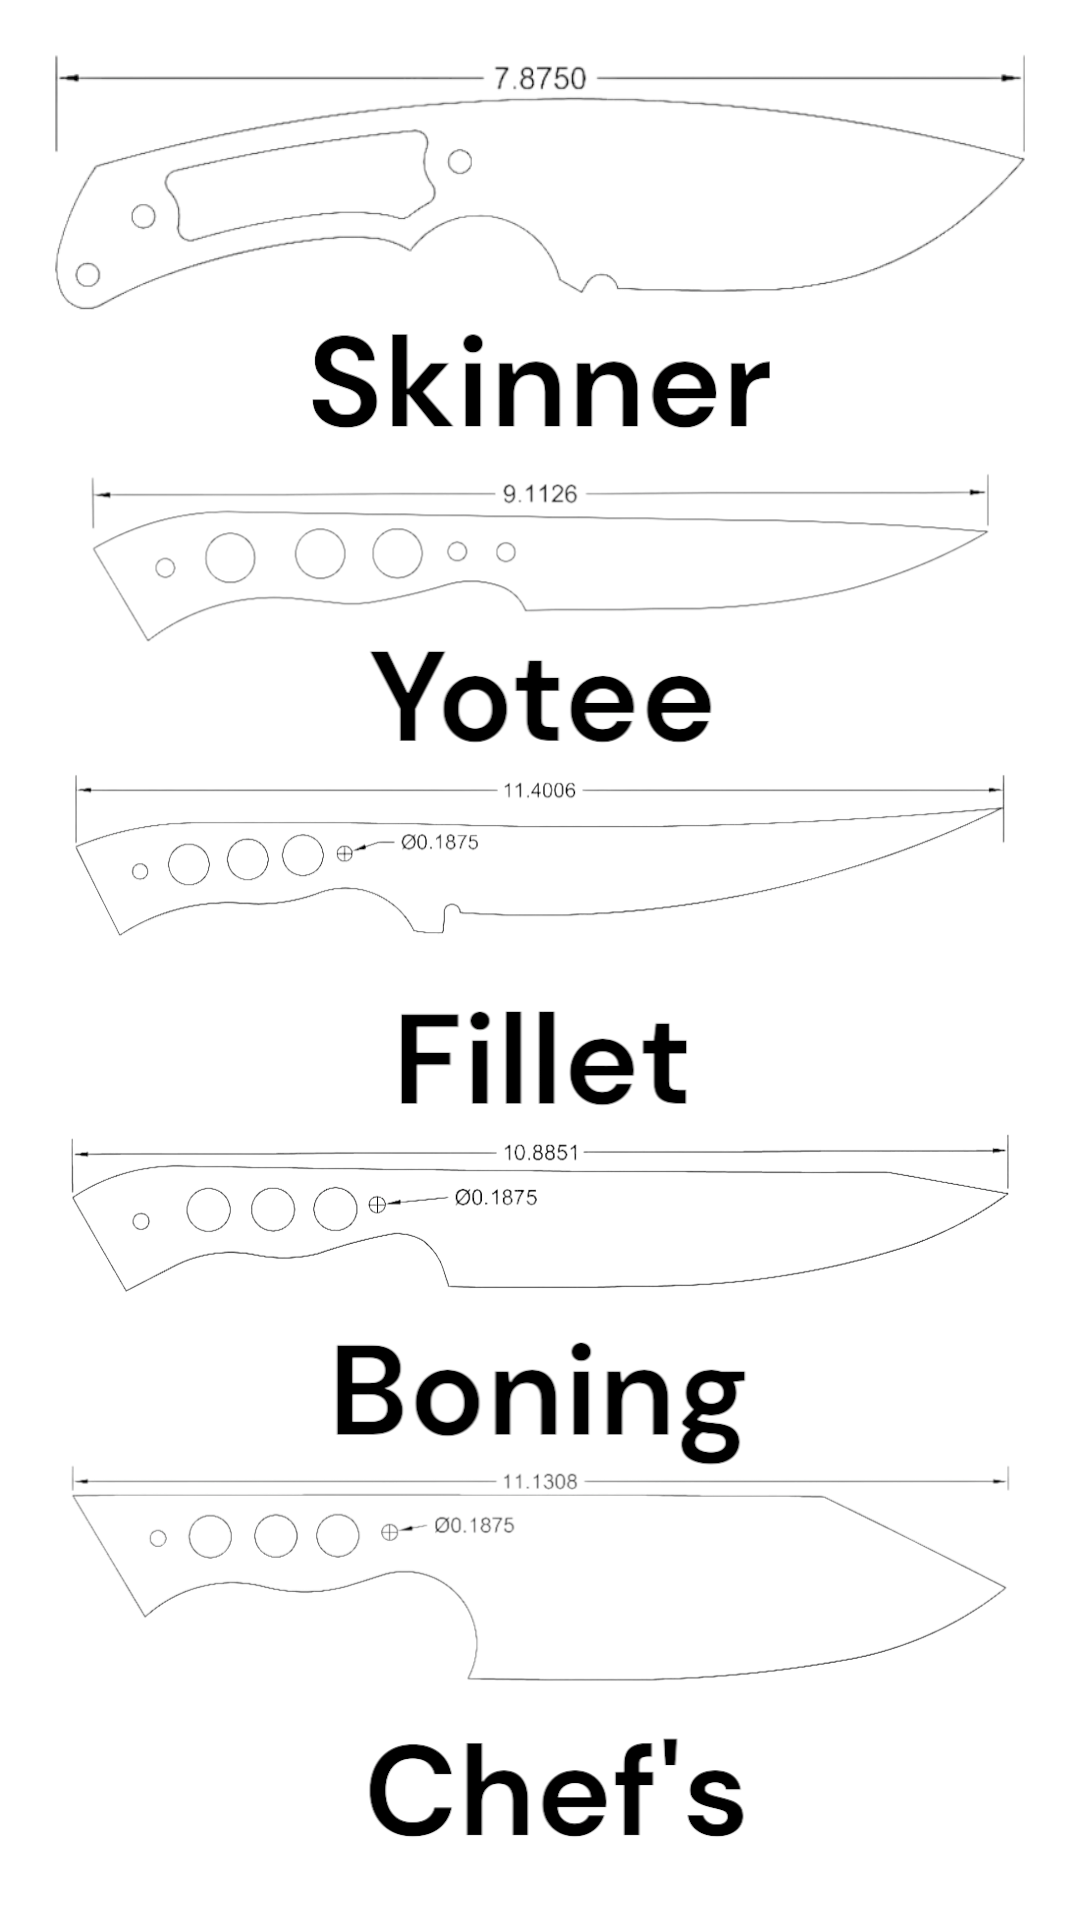 Knife Pre Order